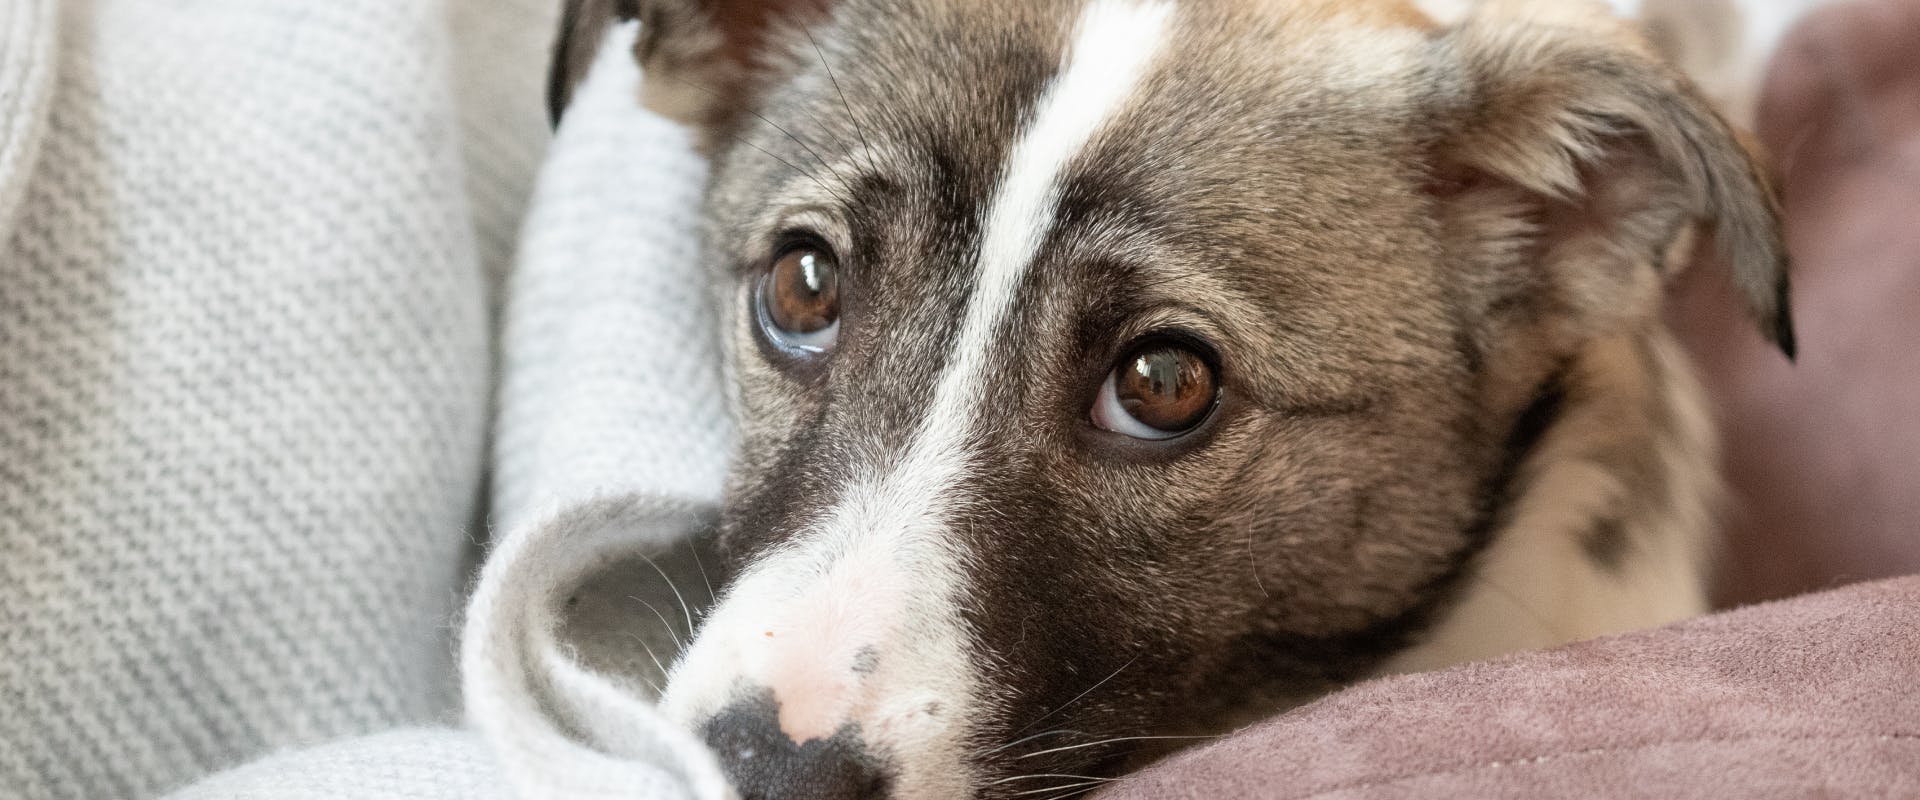 A rescue dog snuggled in a blanket.